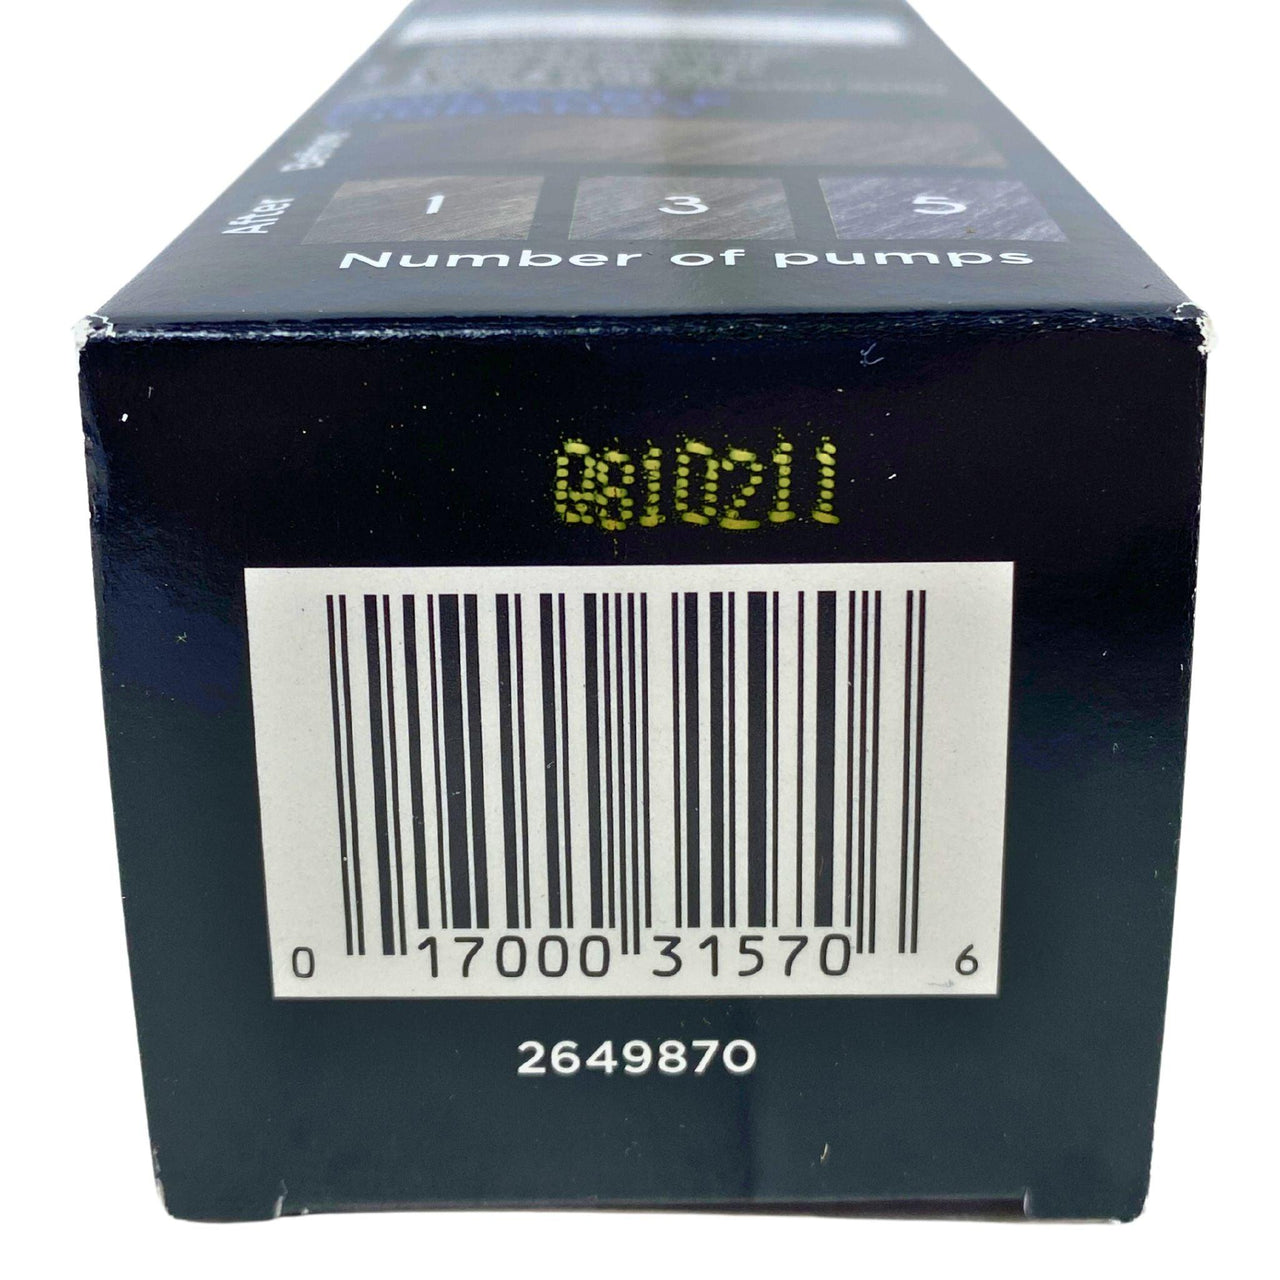 Schwarzkopf Color Boost Color Vibrancy Booster Dark Cool (50 Pcs Lot) - Discount Wholesalers Inc